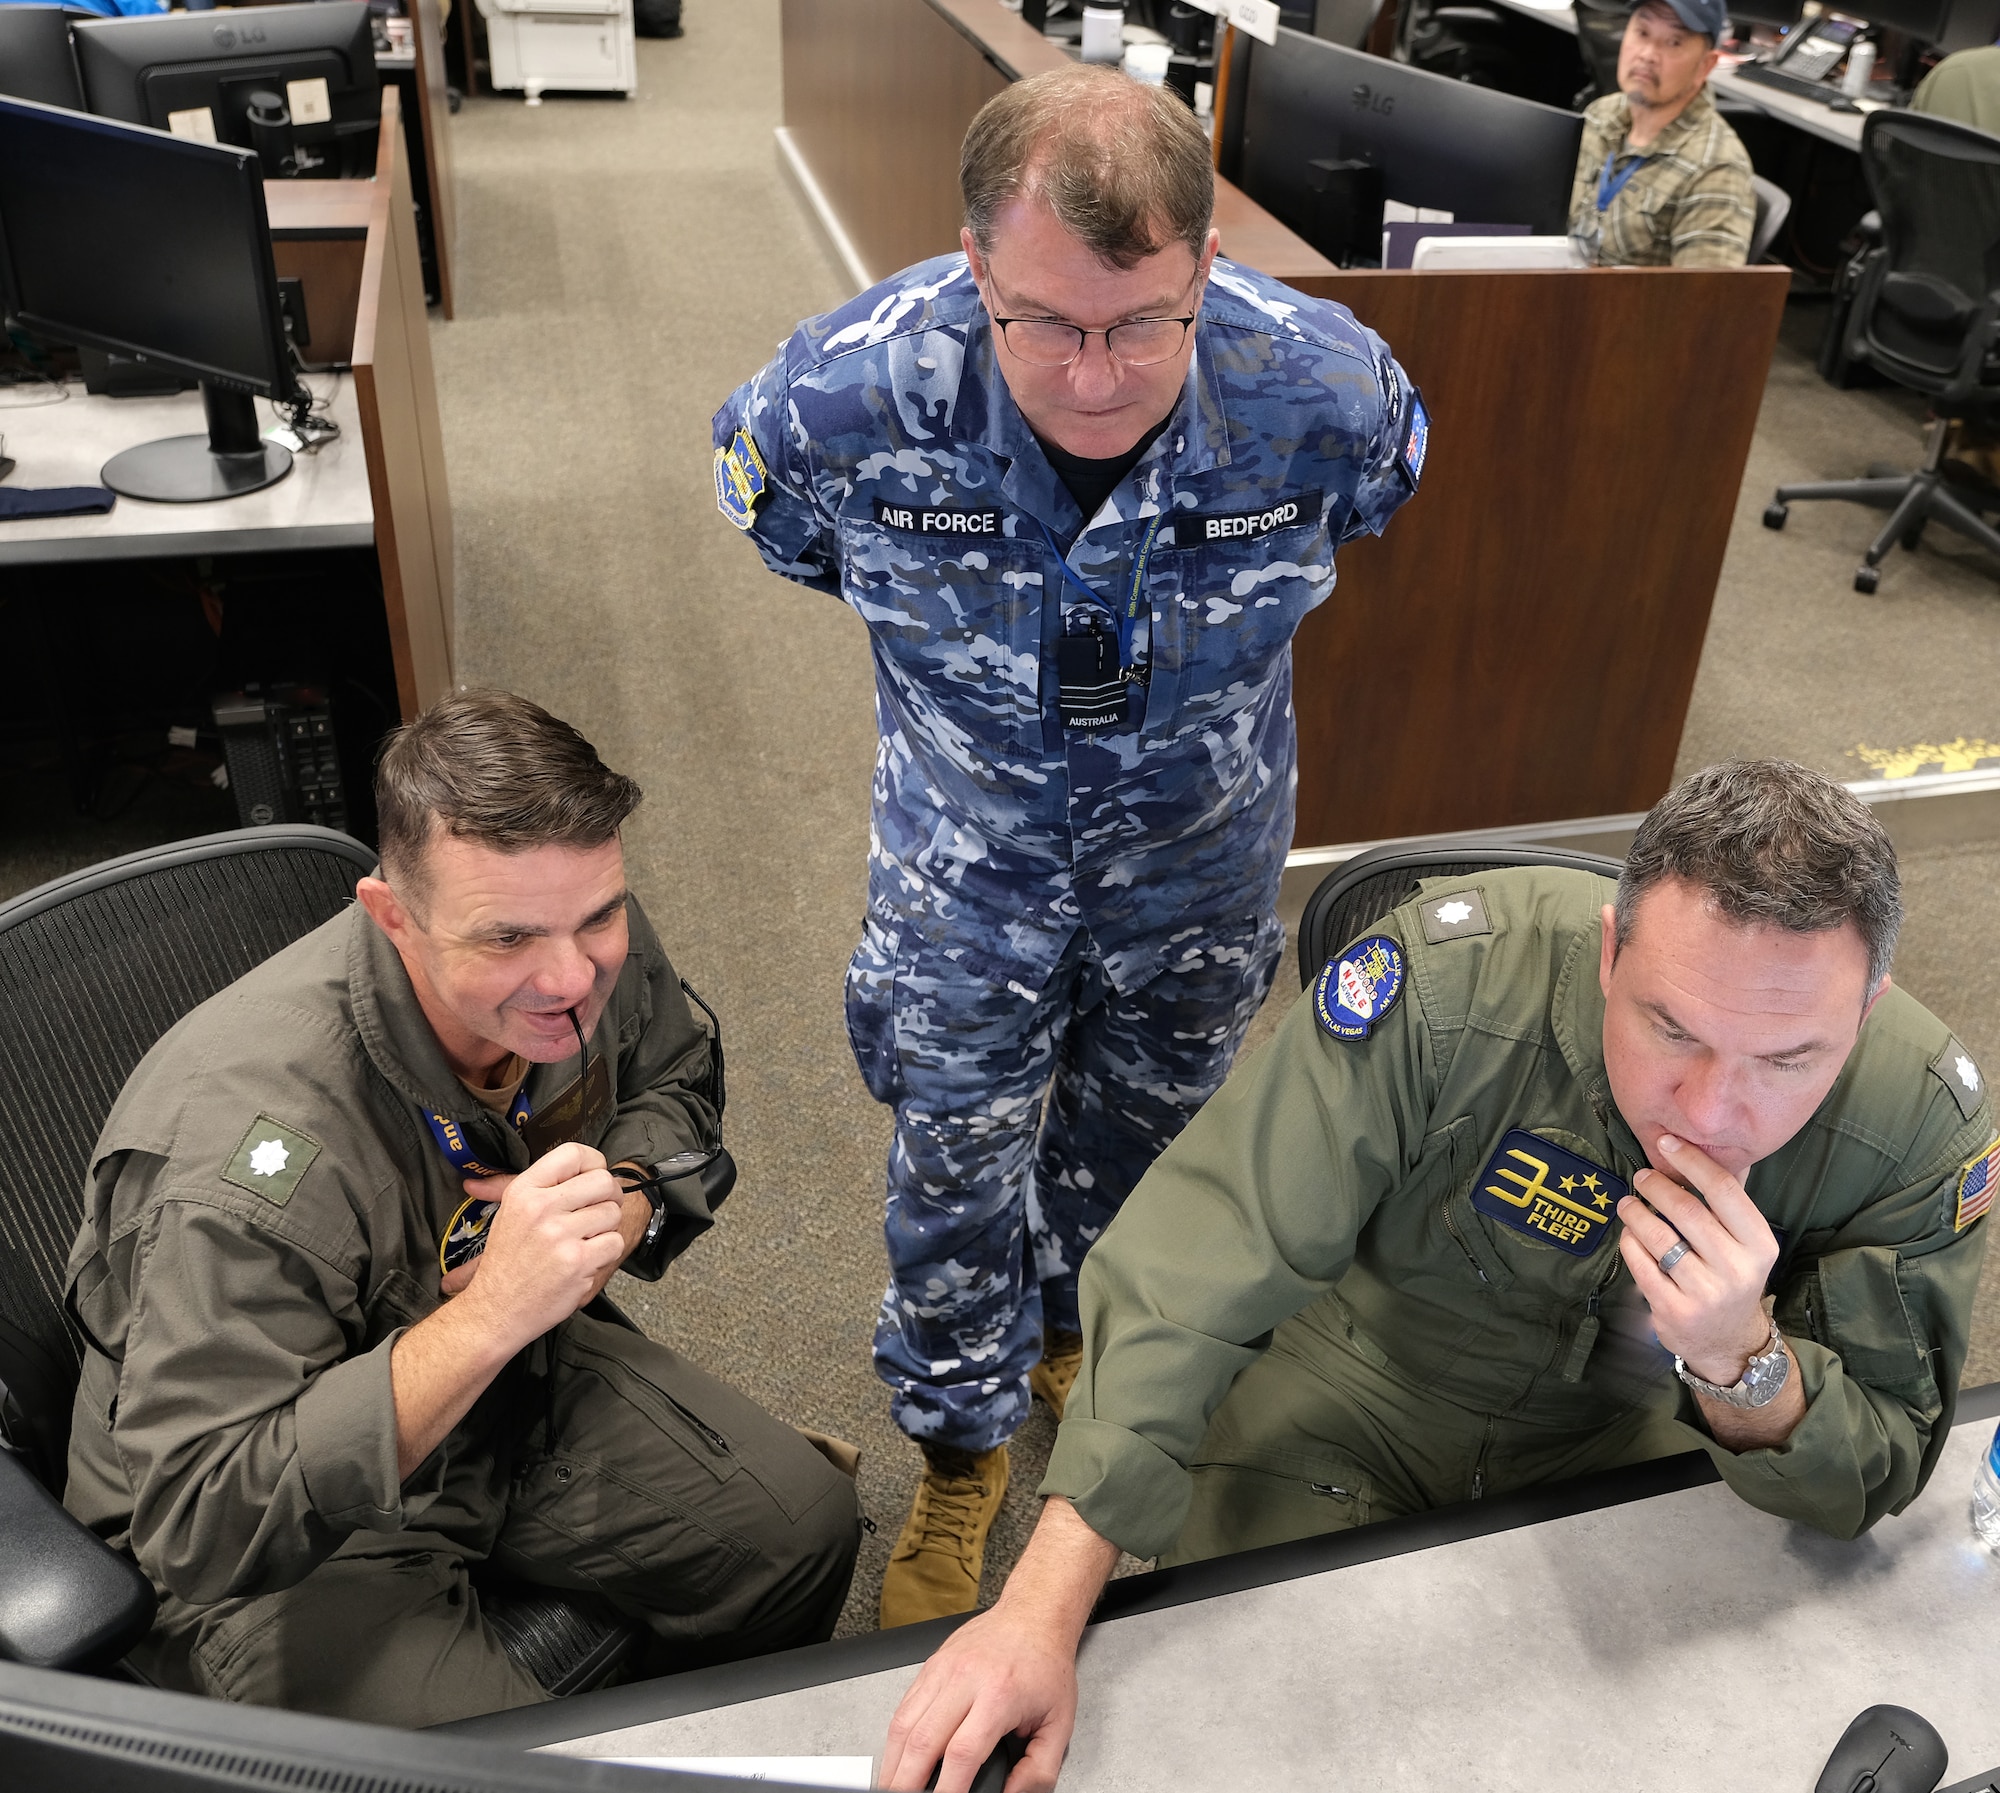 uniformed military members working at computers.